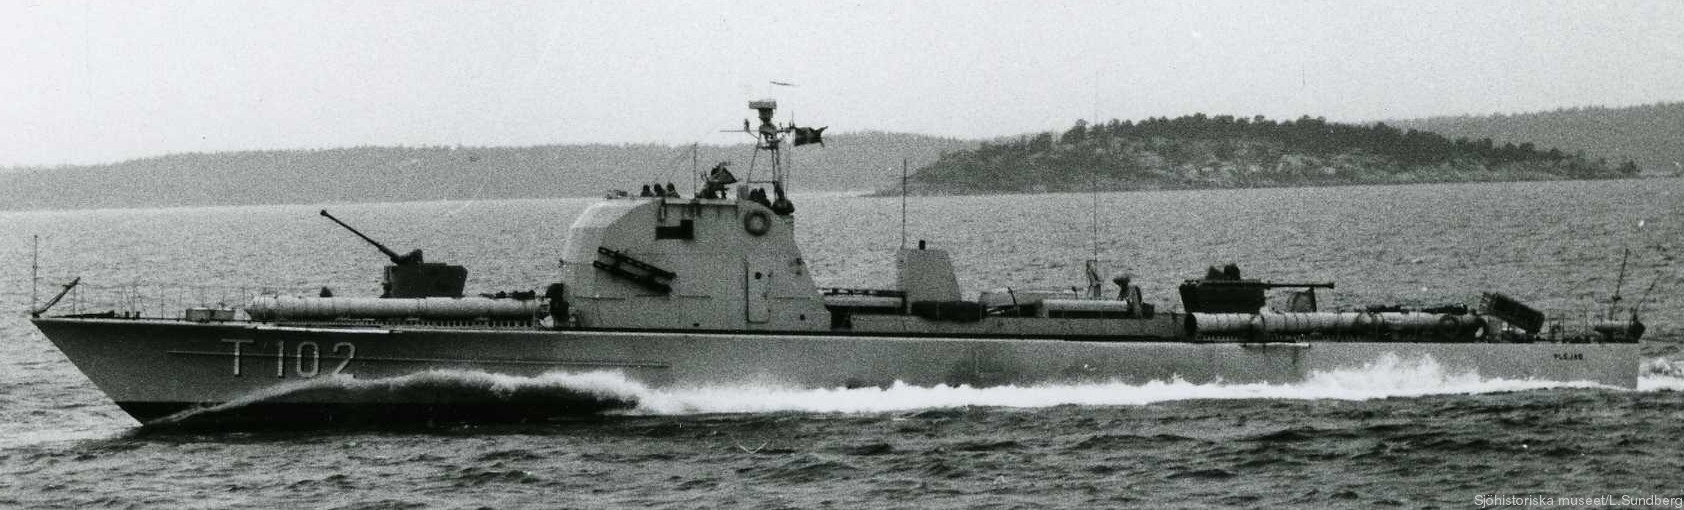 t102 plejad hms hswms class fast attack craft torpedo boat vessel swedish navy svenska marinen 08